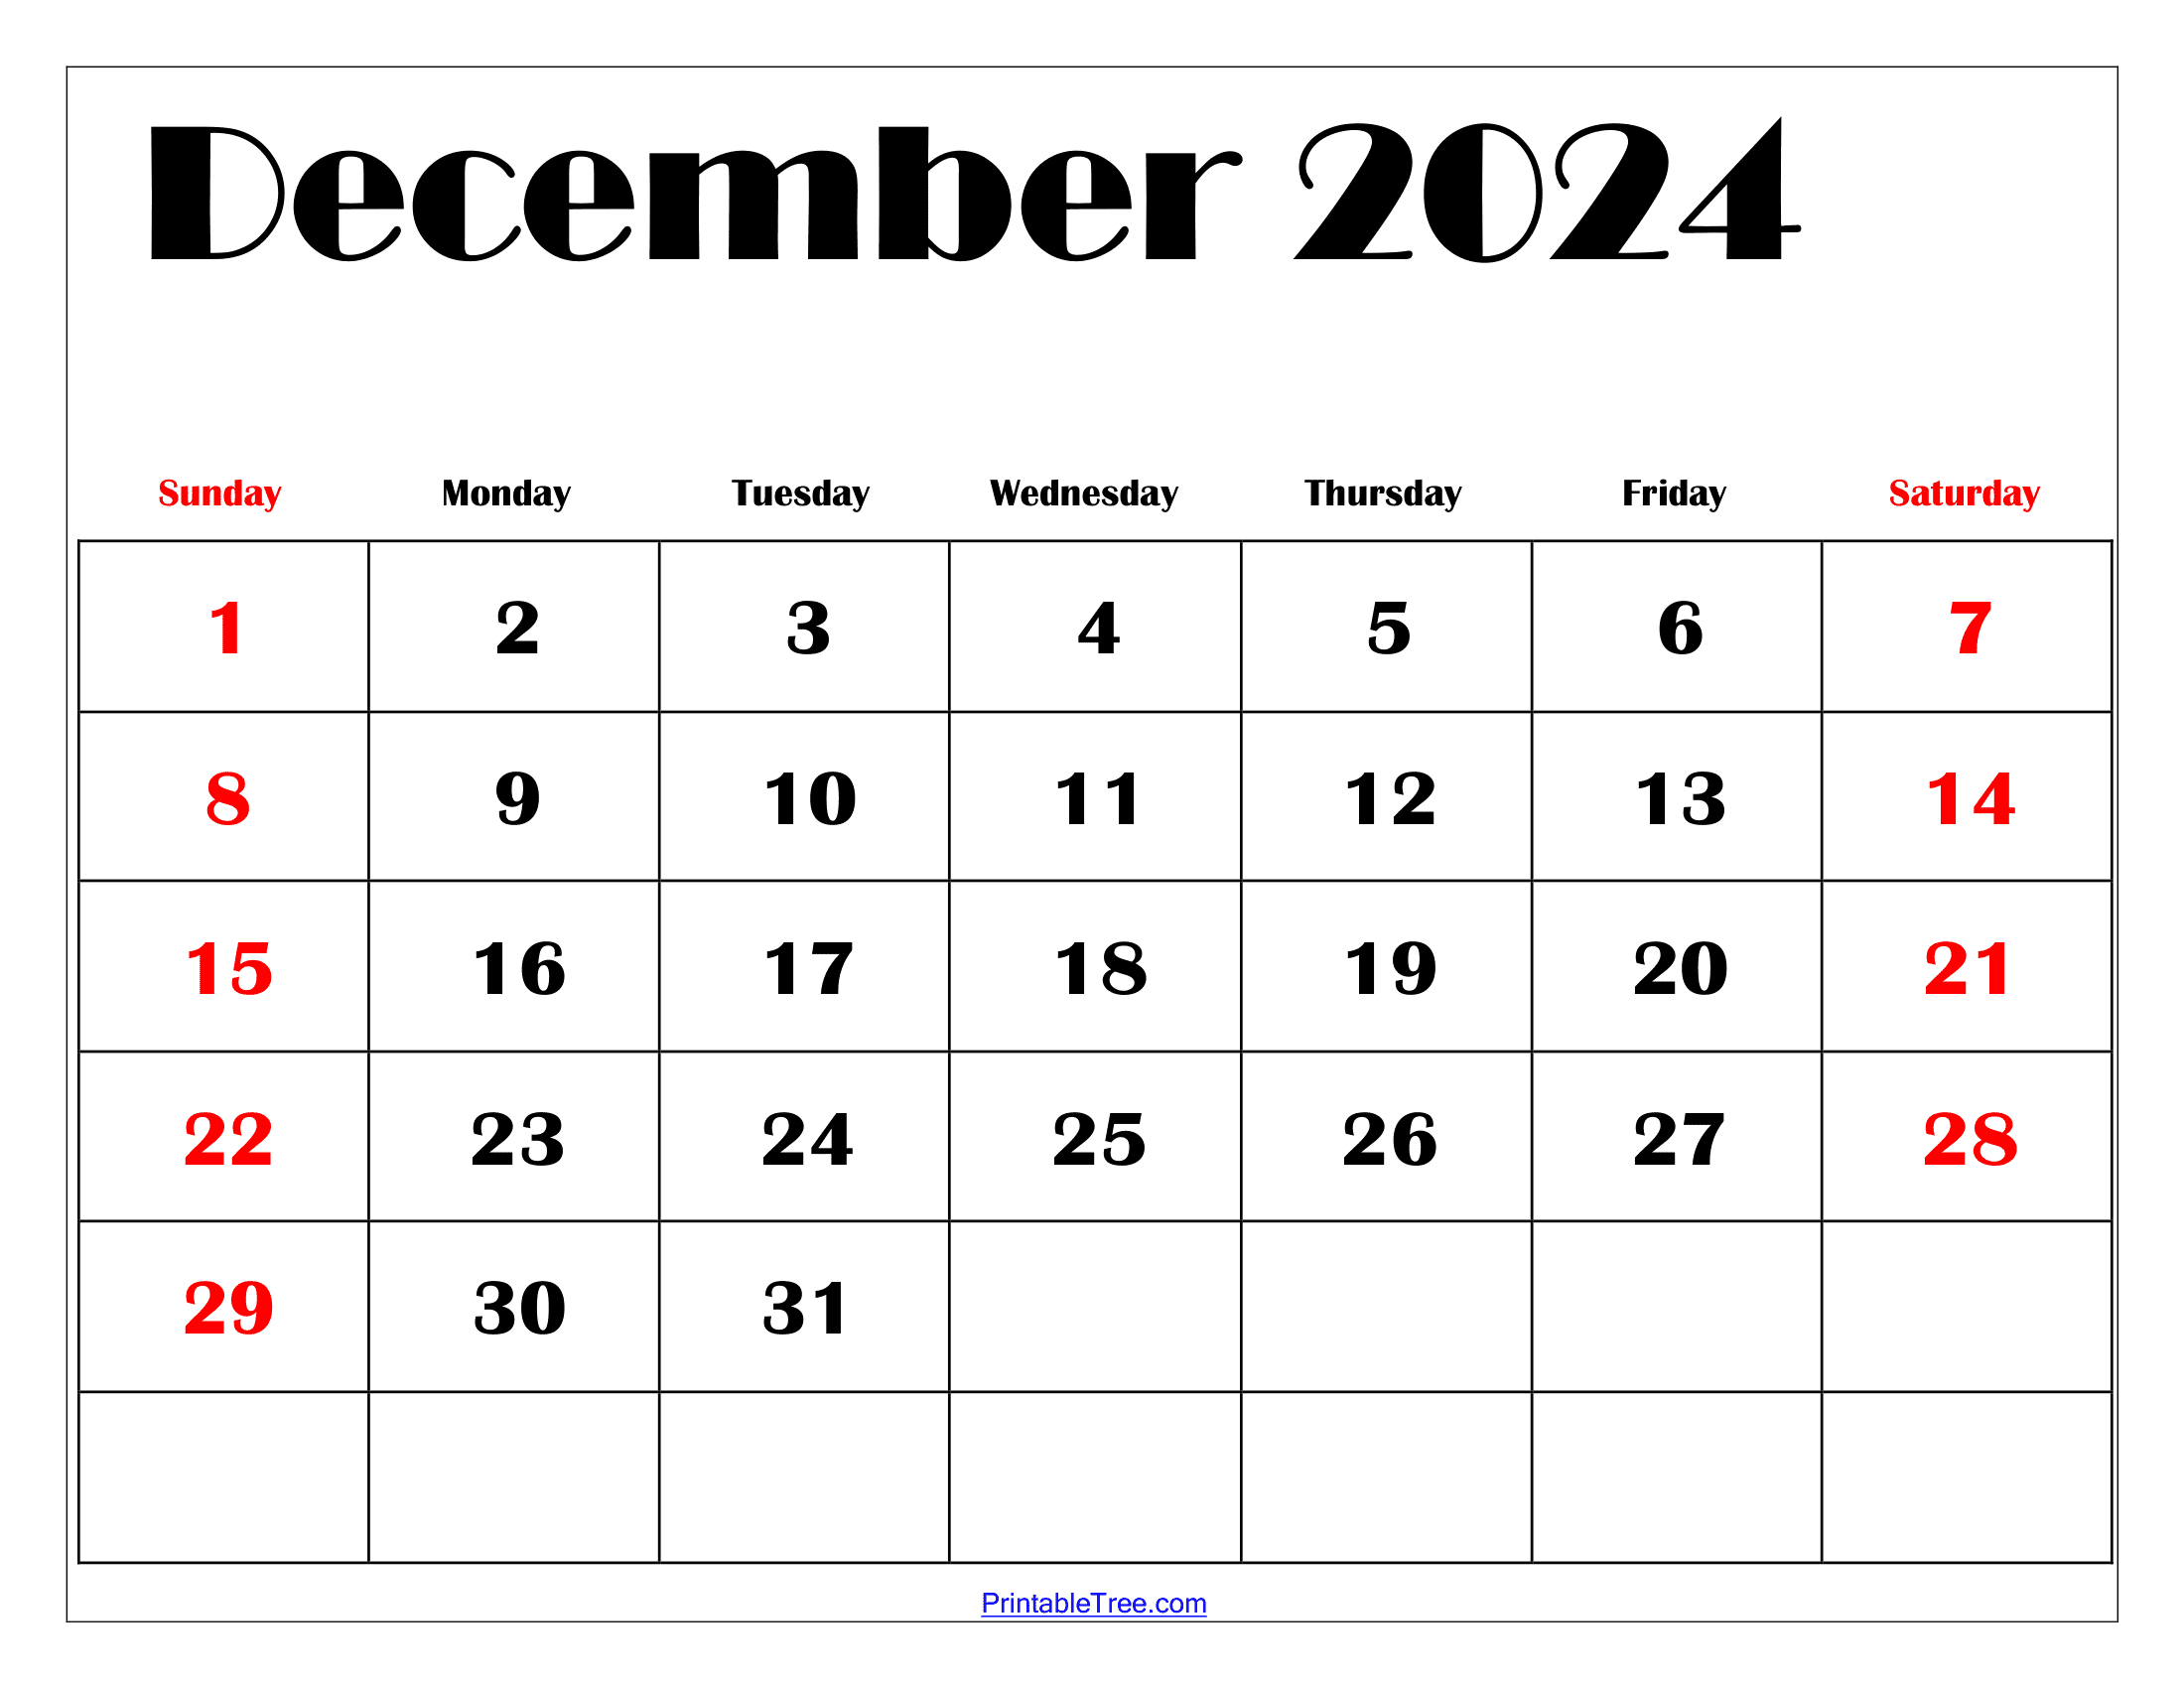 Printable Calendar December 2024 2024 Summer Solstice - Free Printable 2024 December Calendar